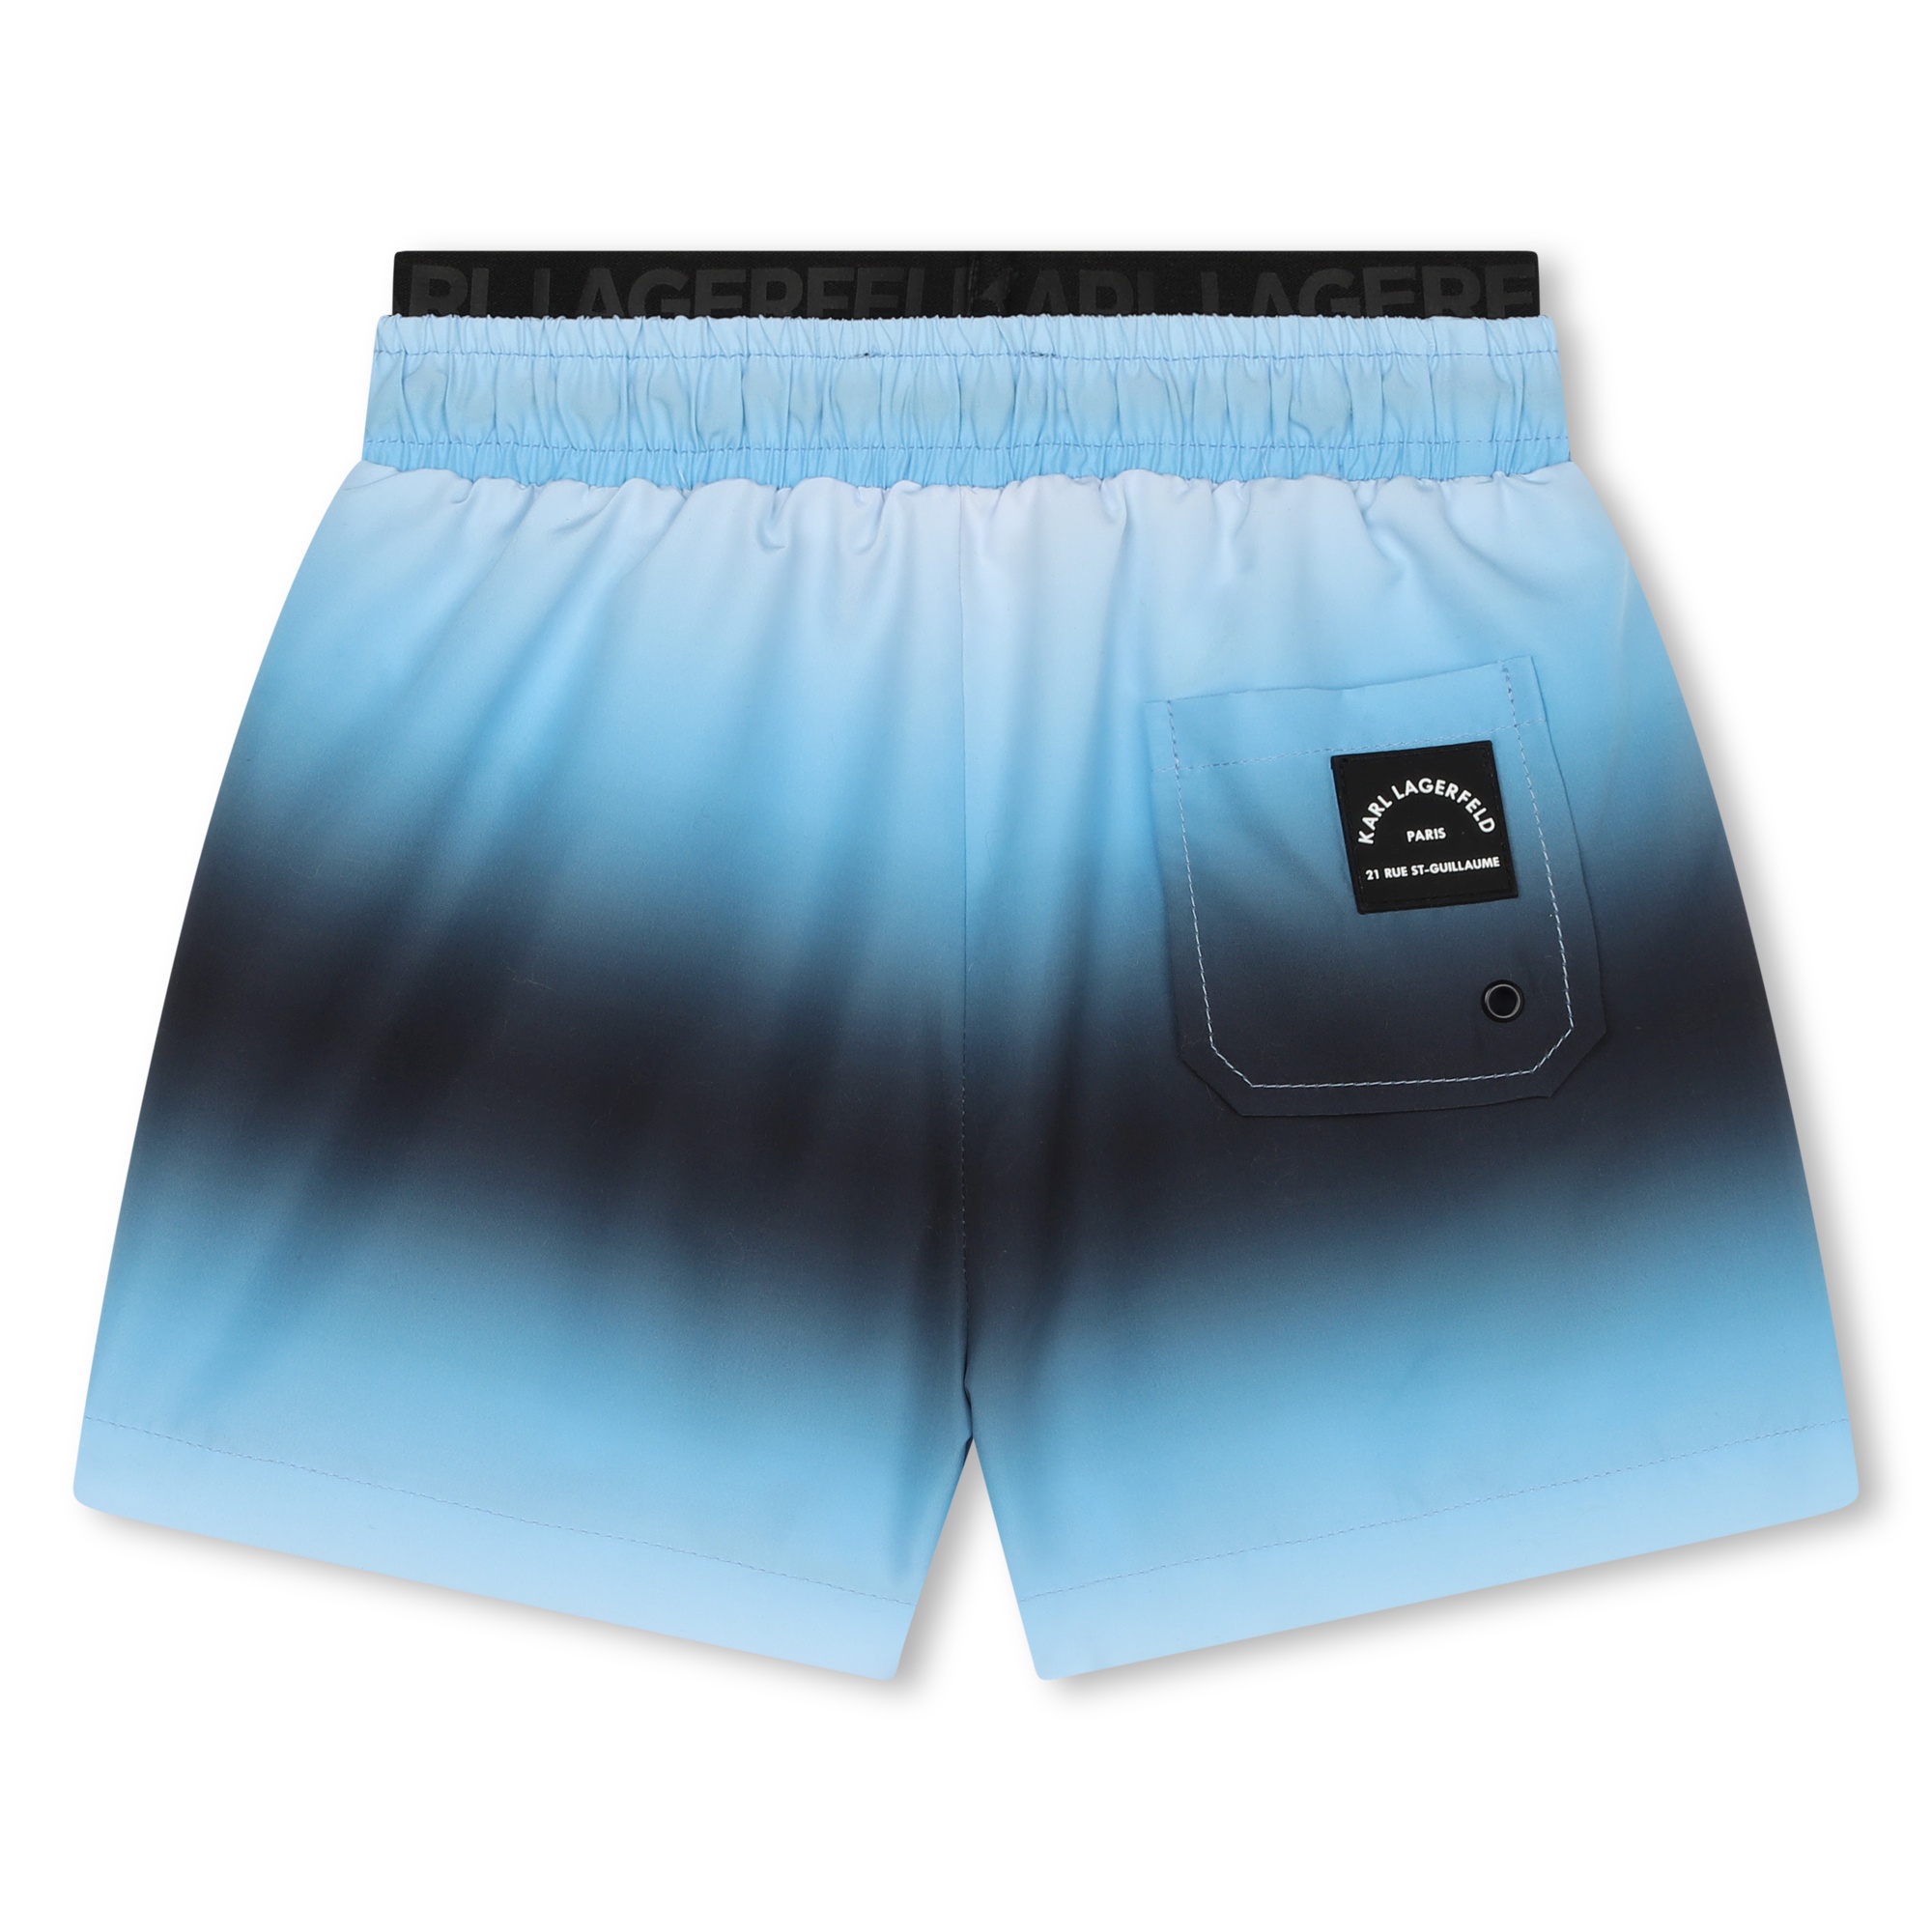 Printed swimming shorts KARL LAGERFELD KIDS for BOY